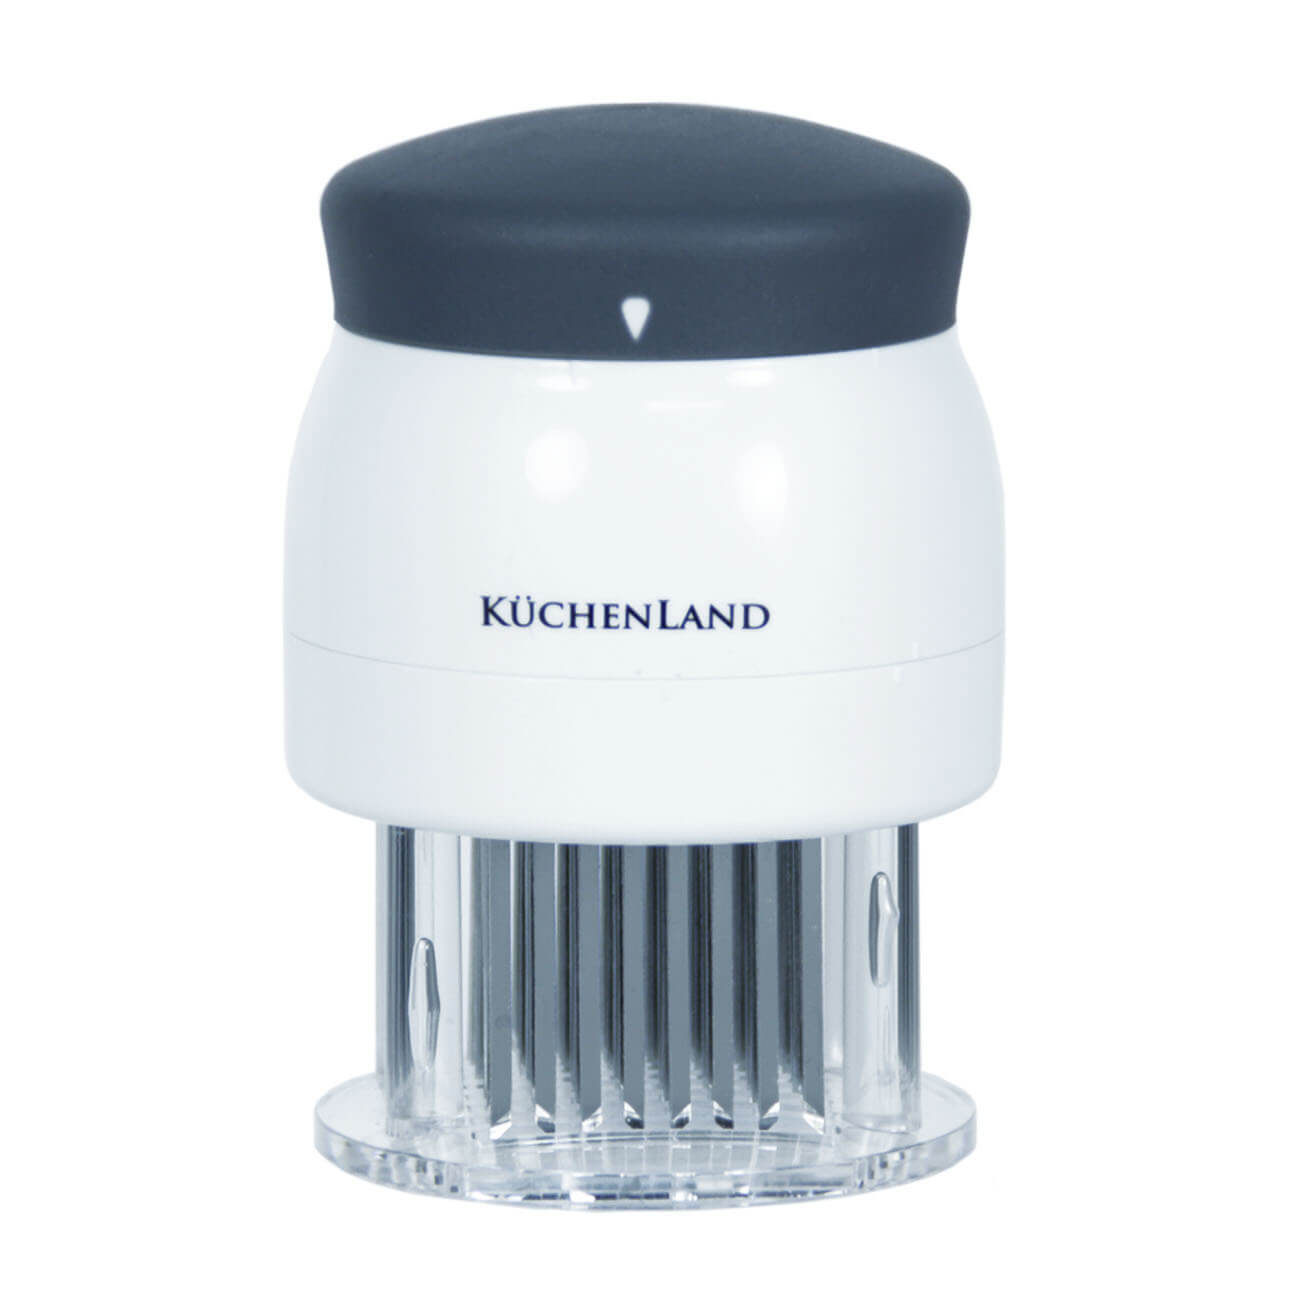 Kuchenland Тендерайзер, 8х11 см, 72 лезвия, сталь/пластик, белый, Grinding трапециевидные титановые лезвия inforce